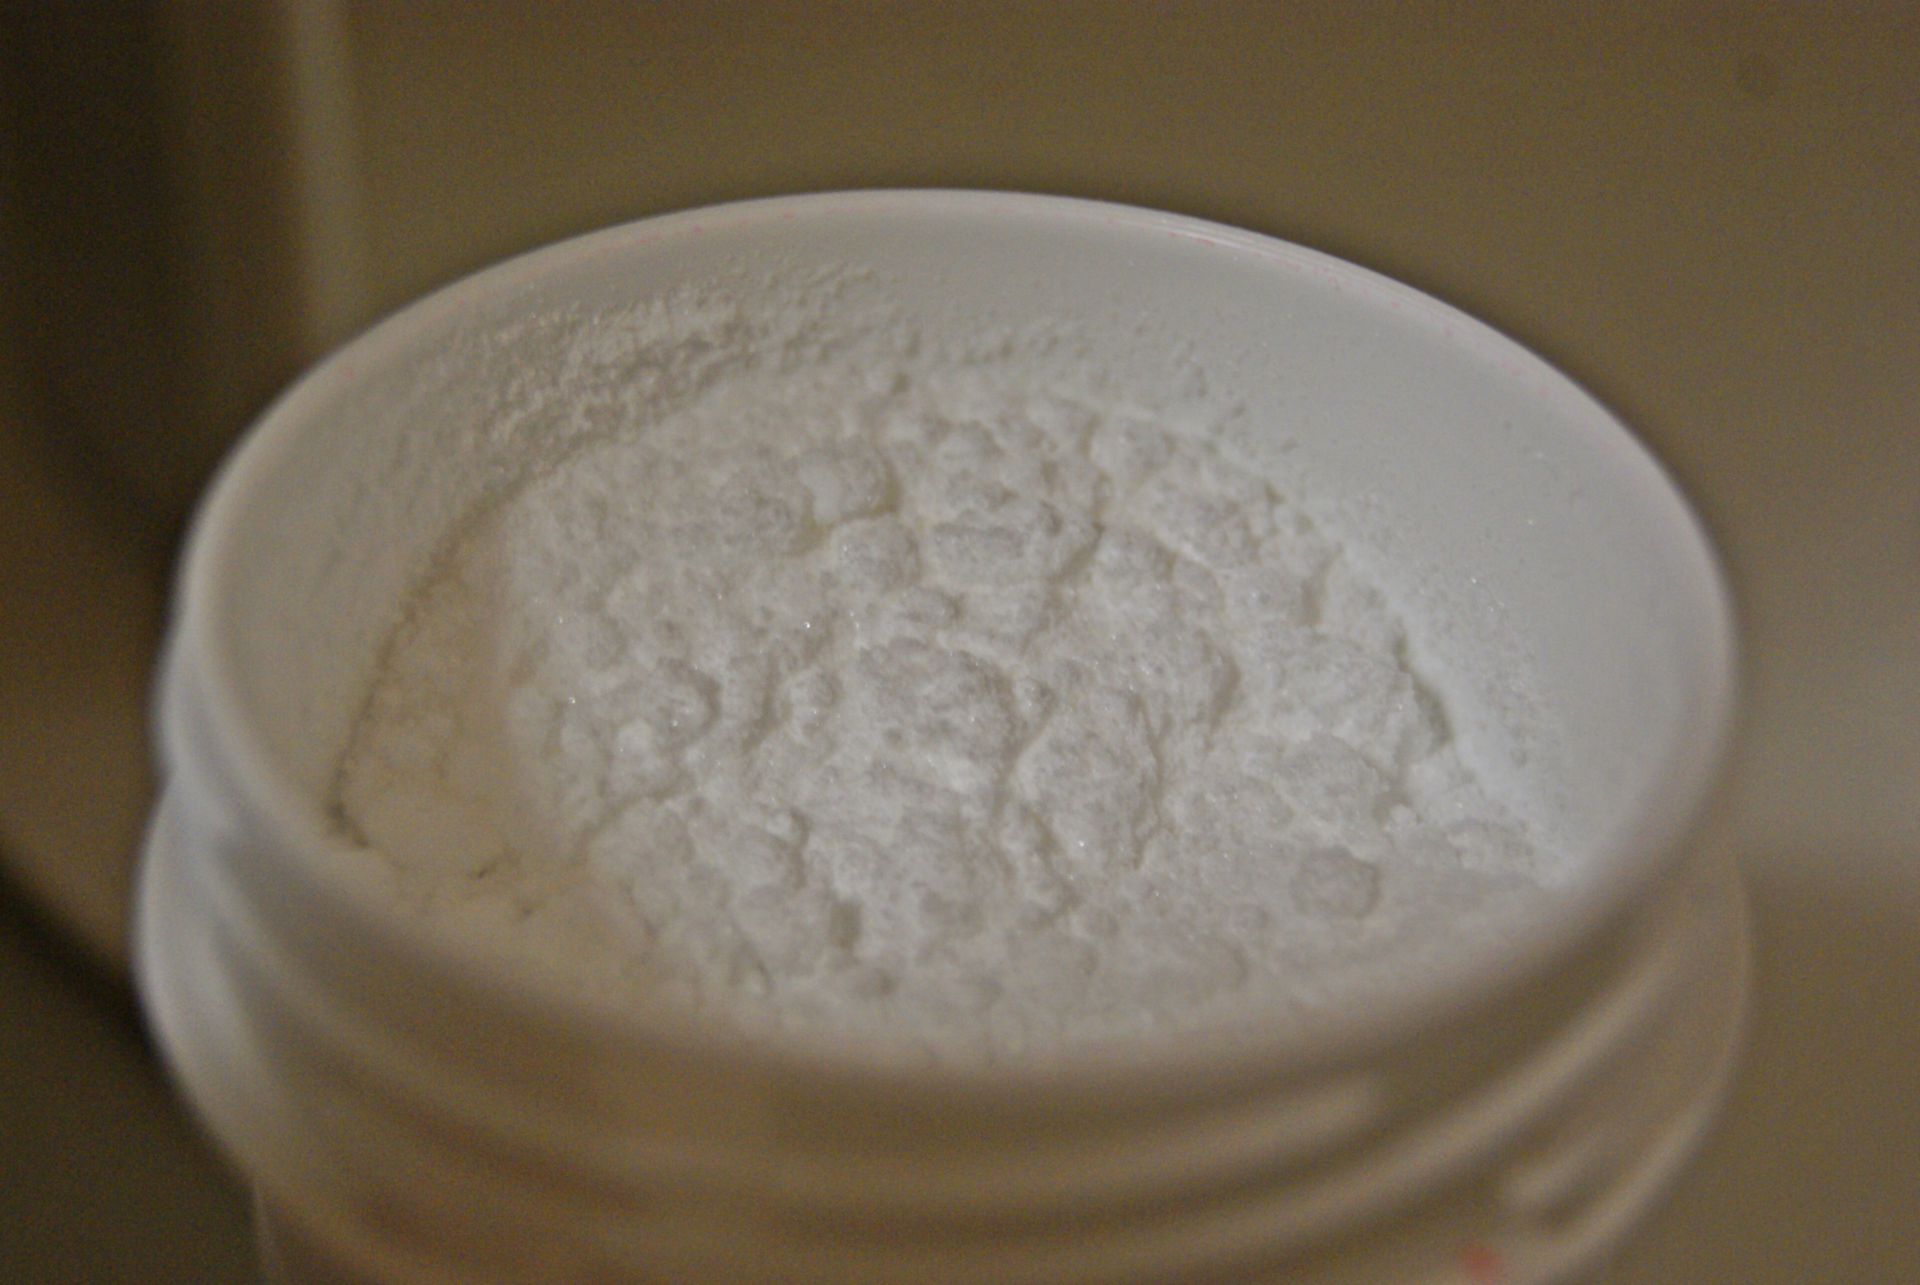 Cocainhydrochlorid